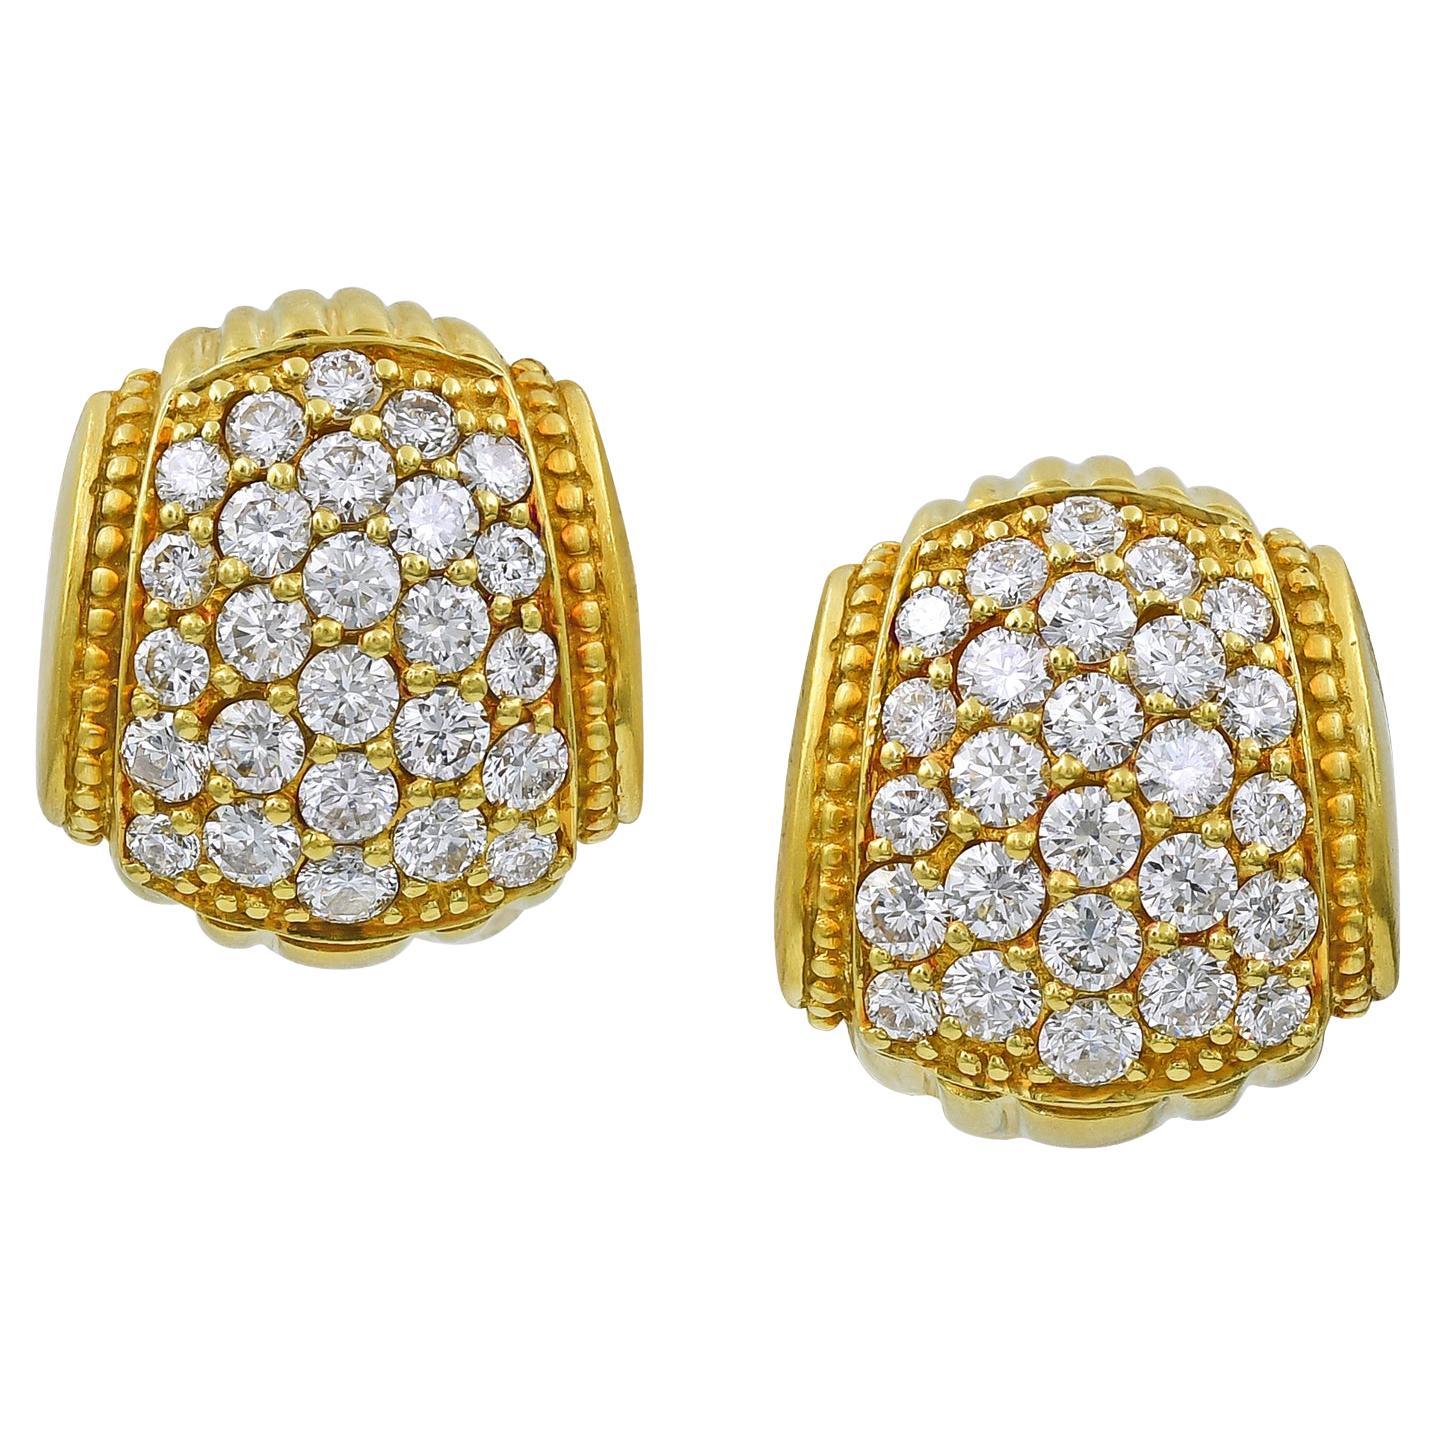 Judith Ripka Vintage Mid-Century Revival Diamond Button Earrings